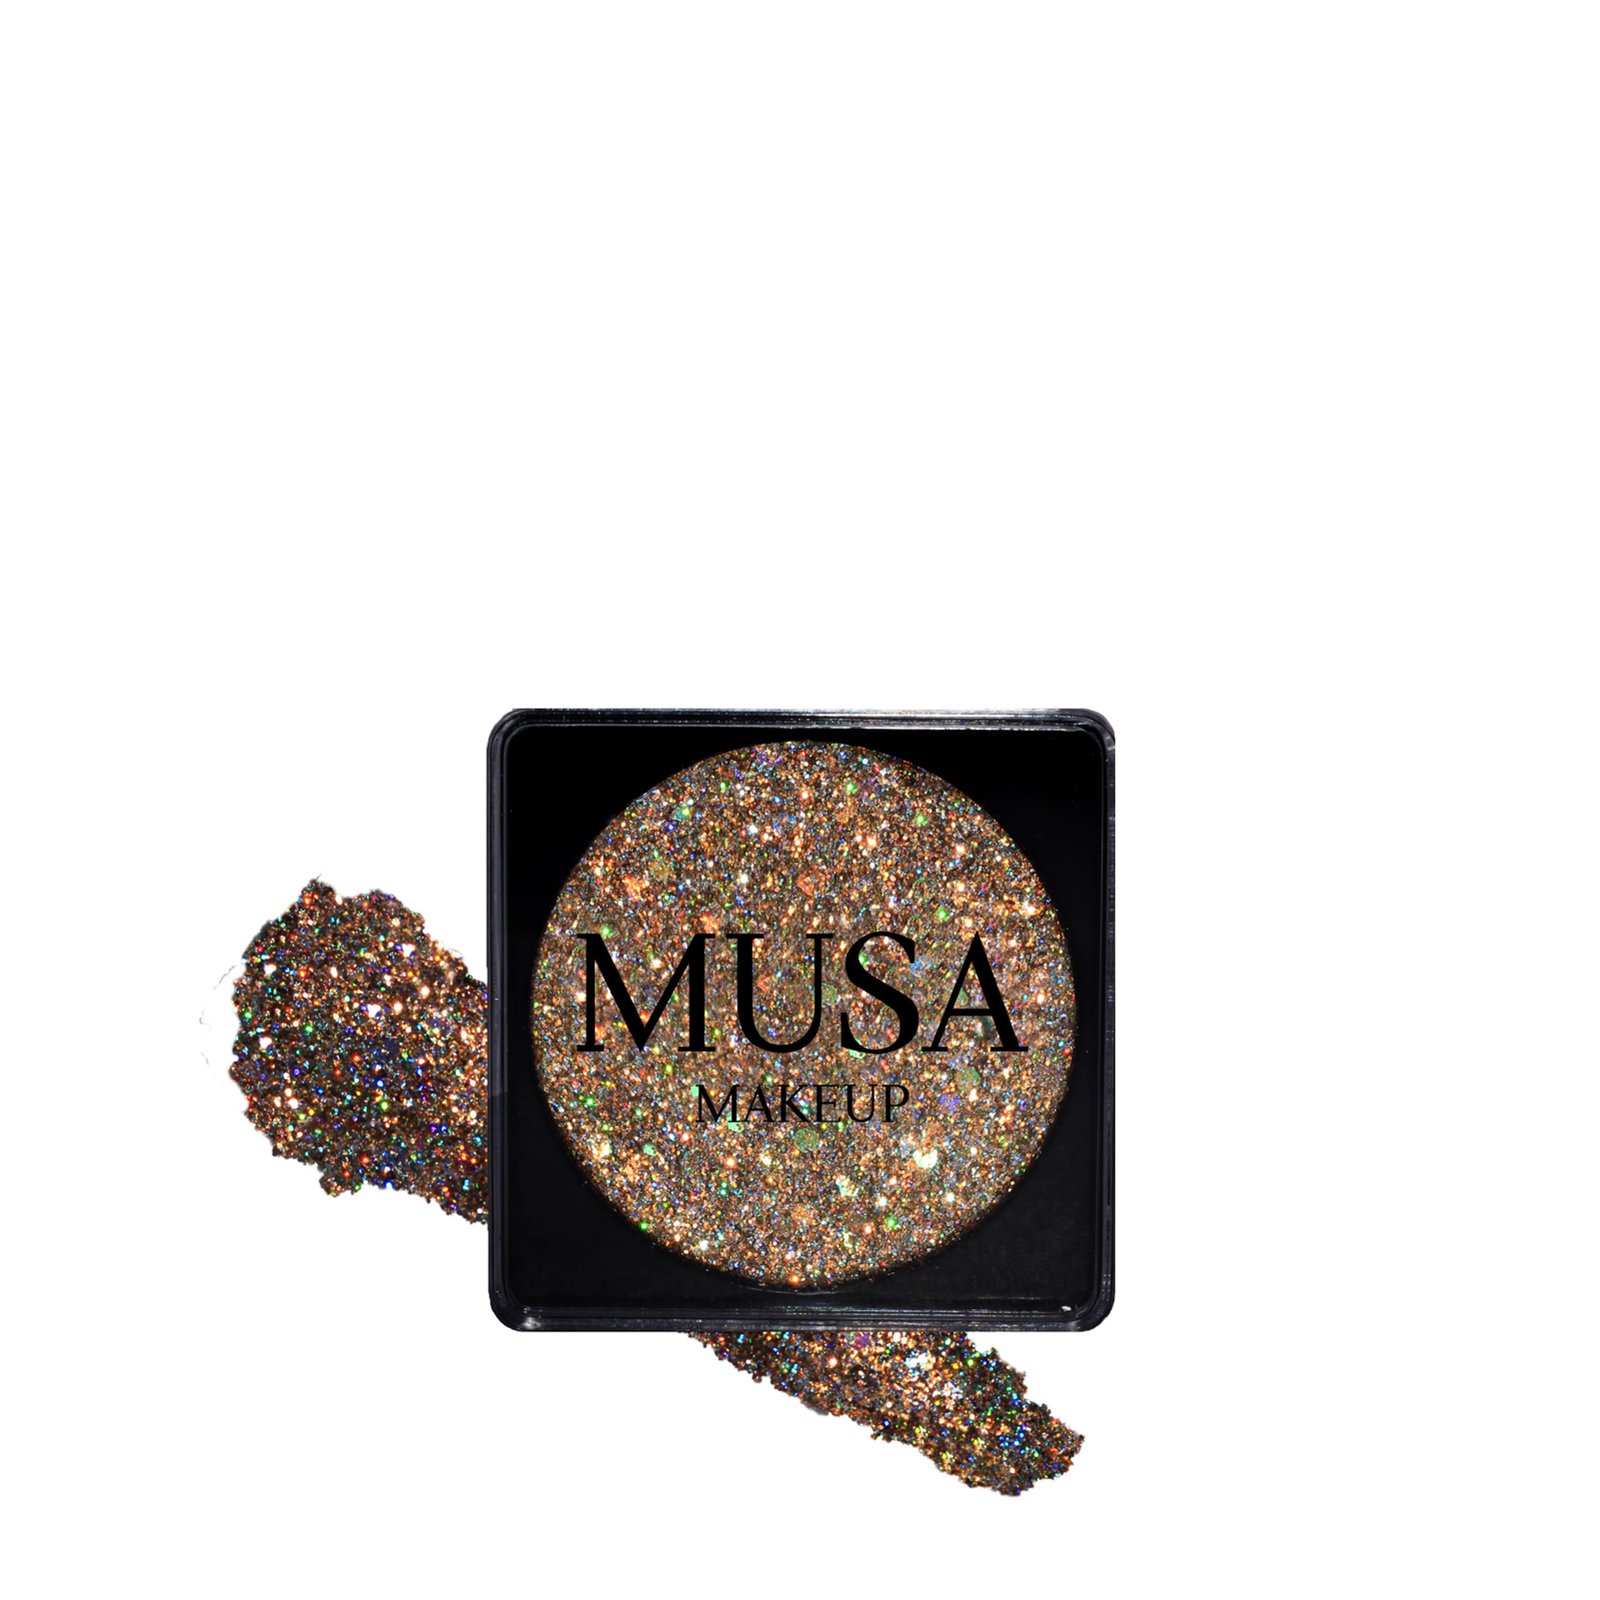 MUSA Makeup Creamy Glitter Pure Pearls 4g (0.14 oz)